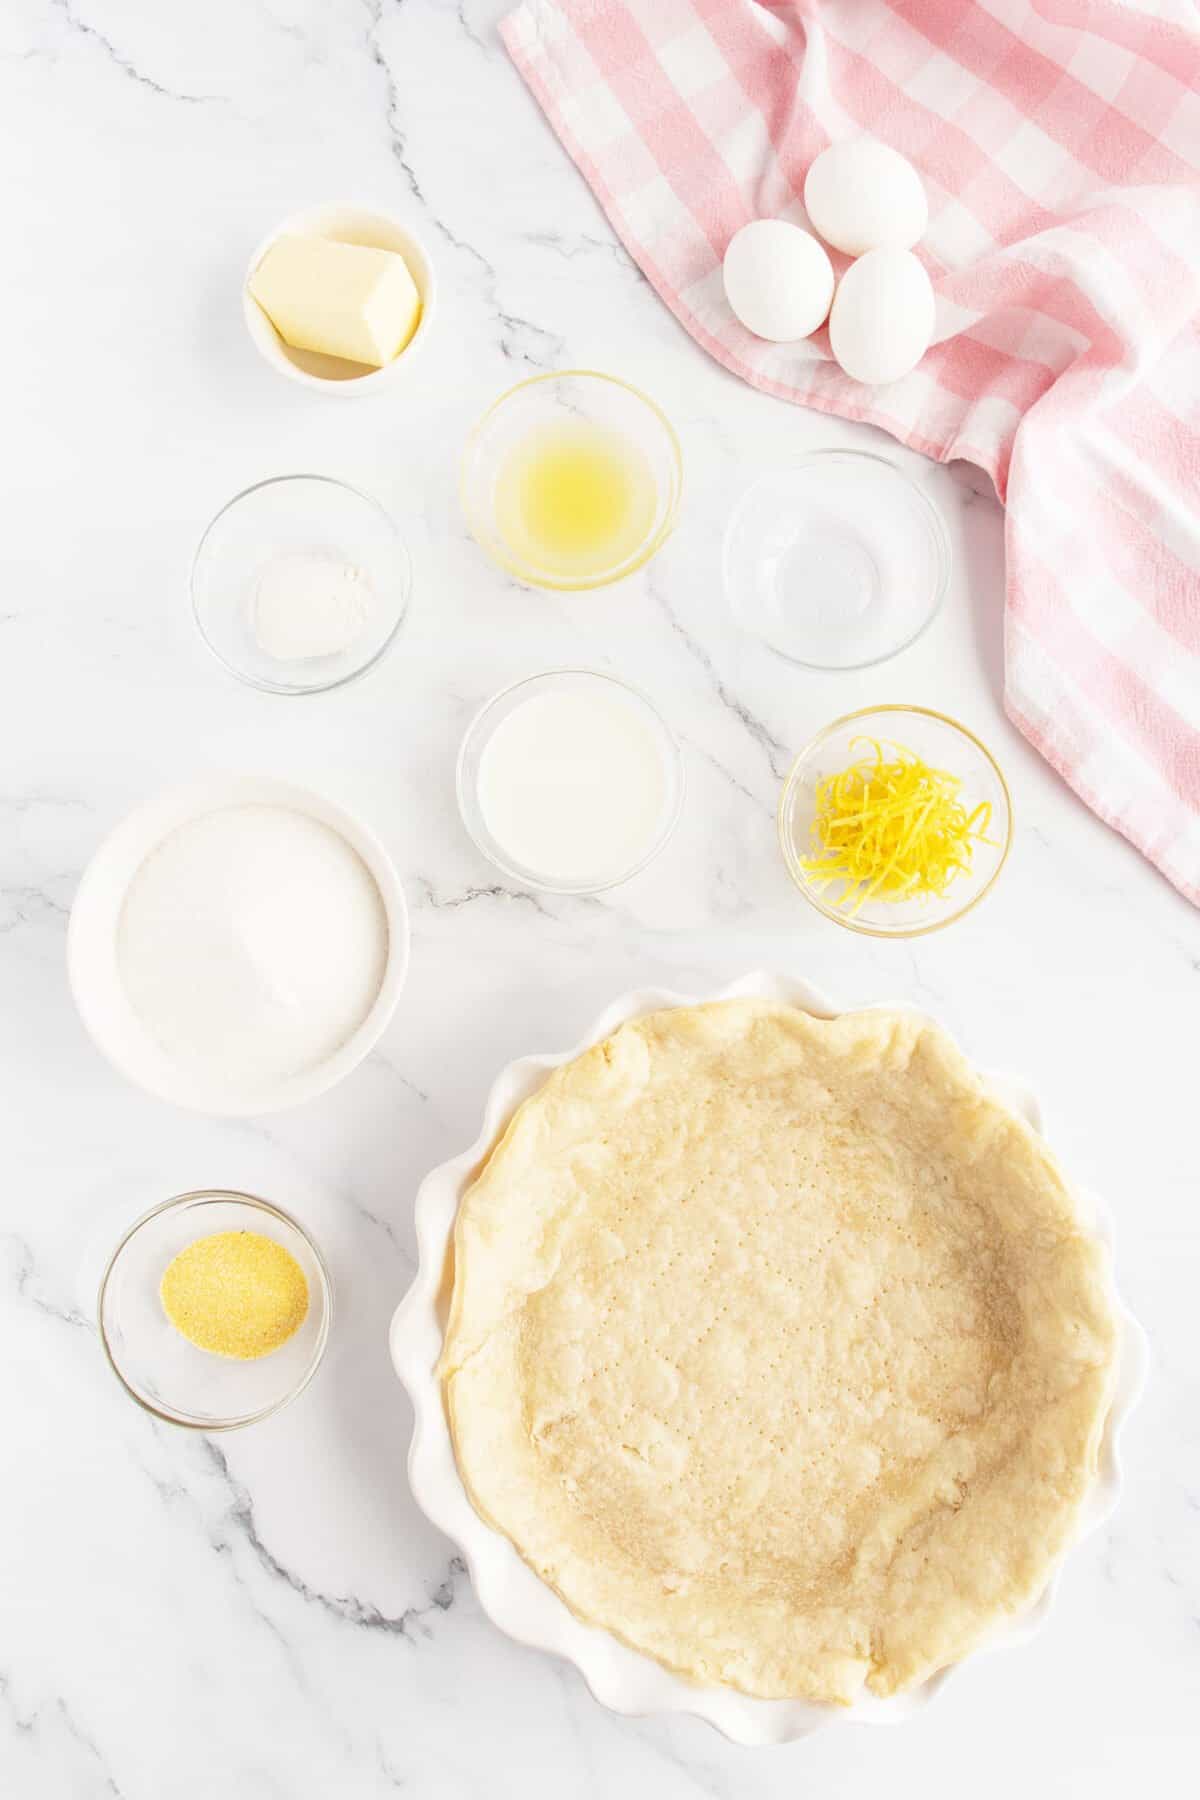 Lemon Chess Pie ingredients